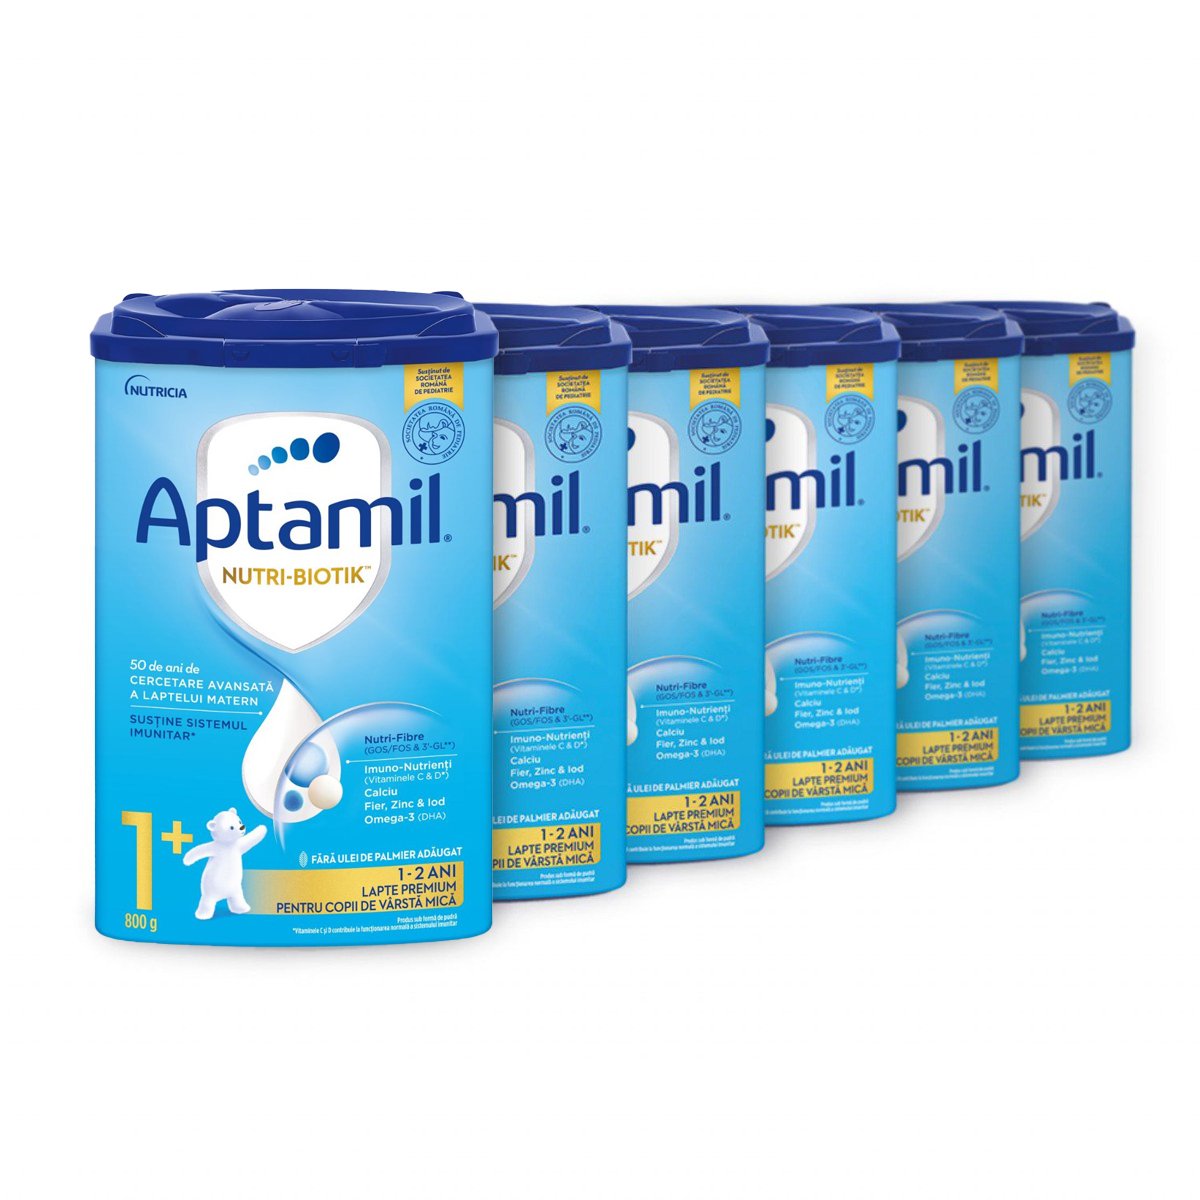 Lapte praf Aptamil Nutri-Biotik 1+, 6 pachete x 800 g, 12-24 luni Aptamil